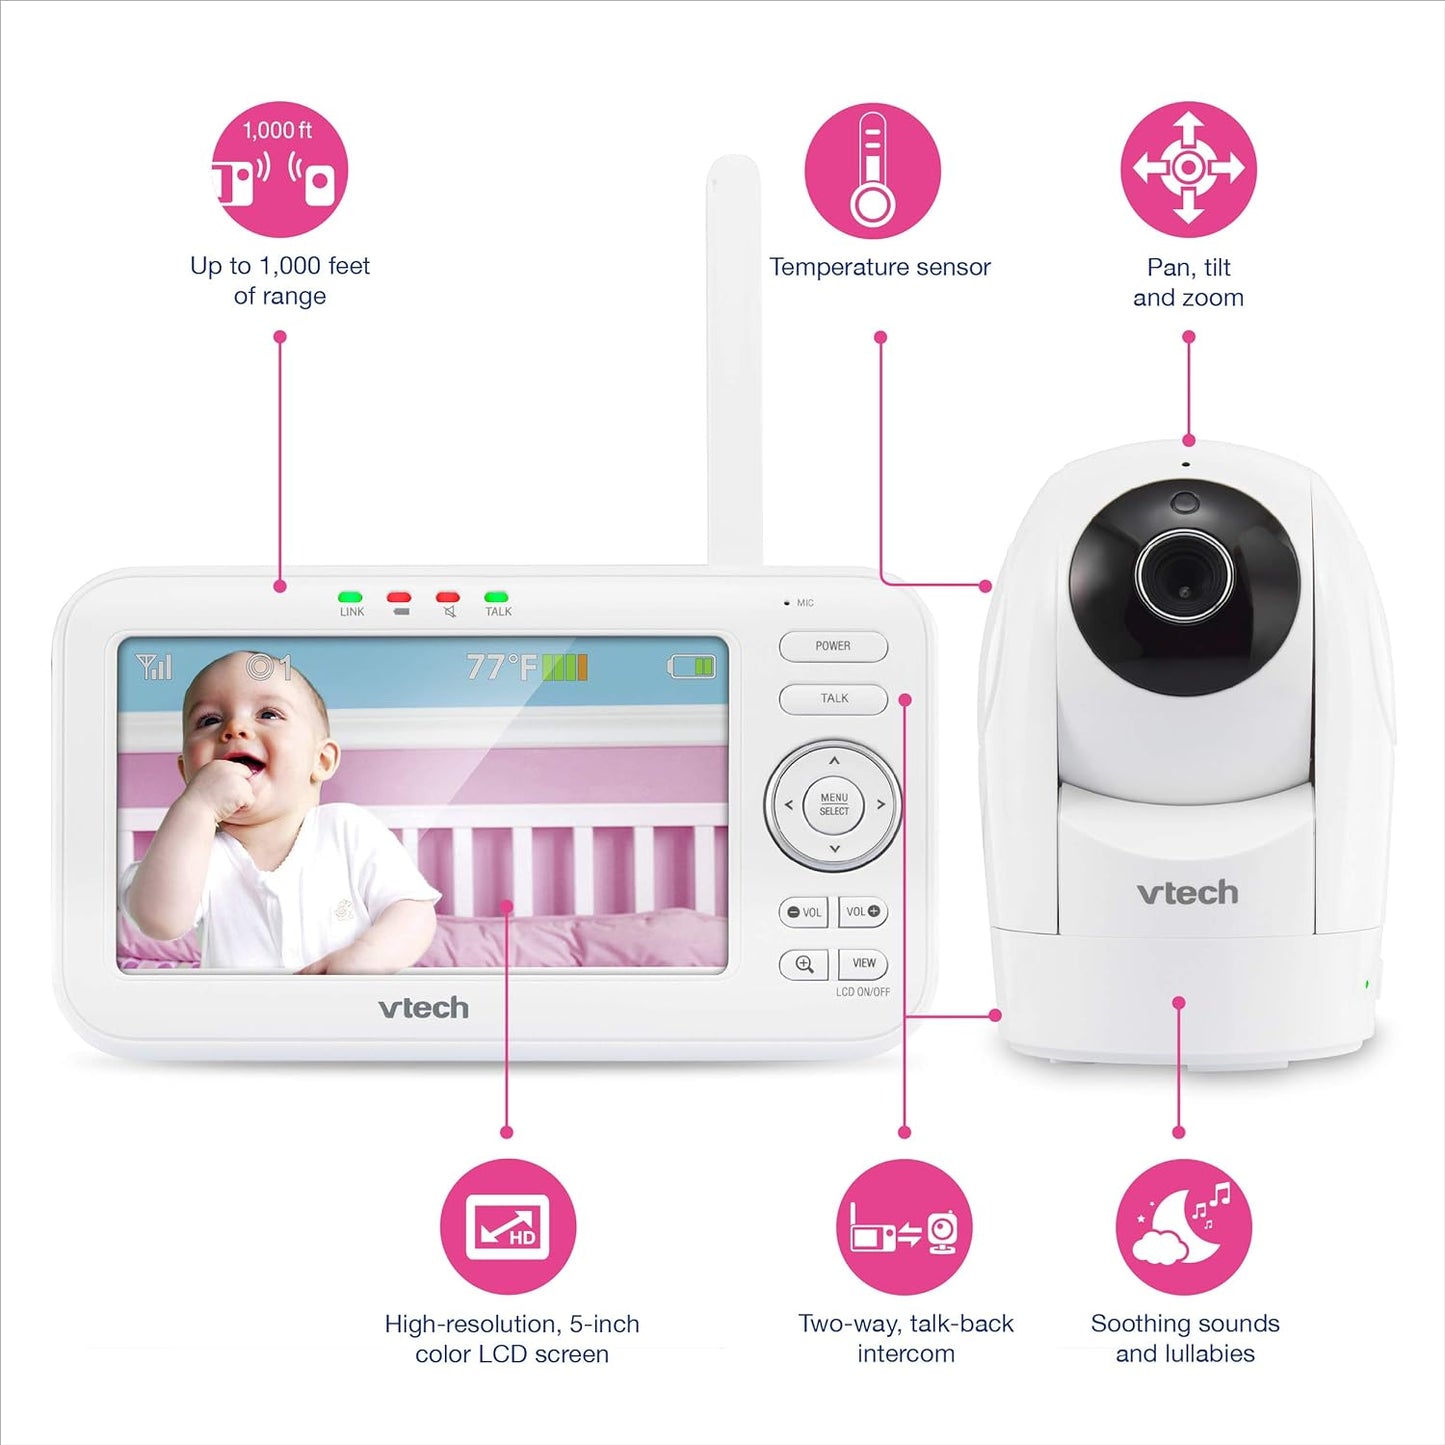 VTech - Digital Video Baby Monitor